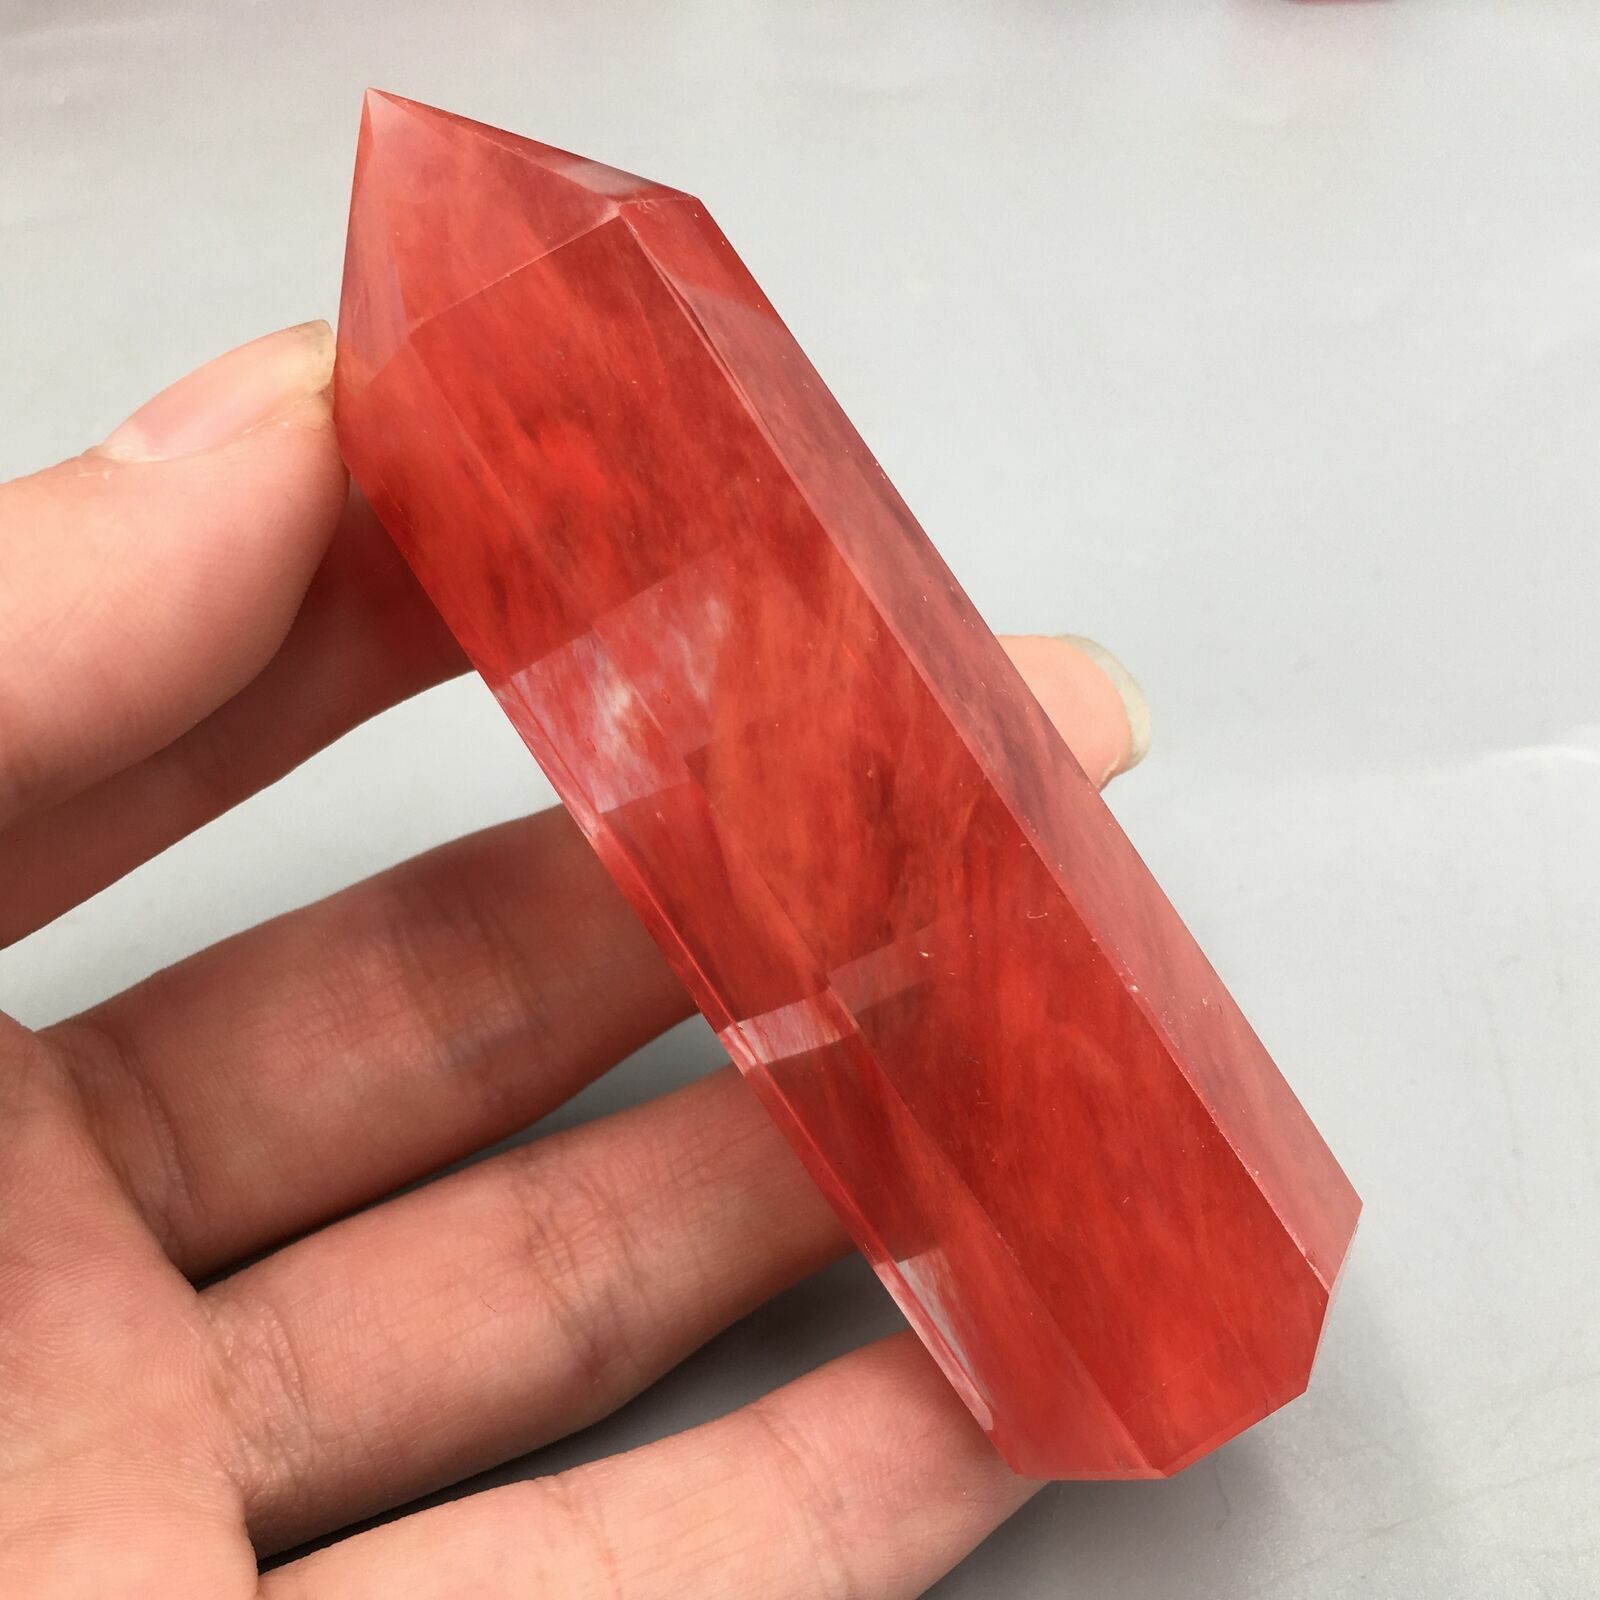  Red melting stone Quartz Crystal Obelisk Point Wand Reiki Healing  1PC